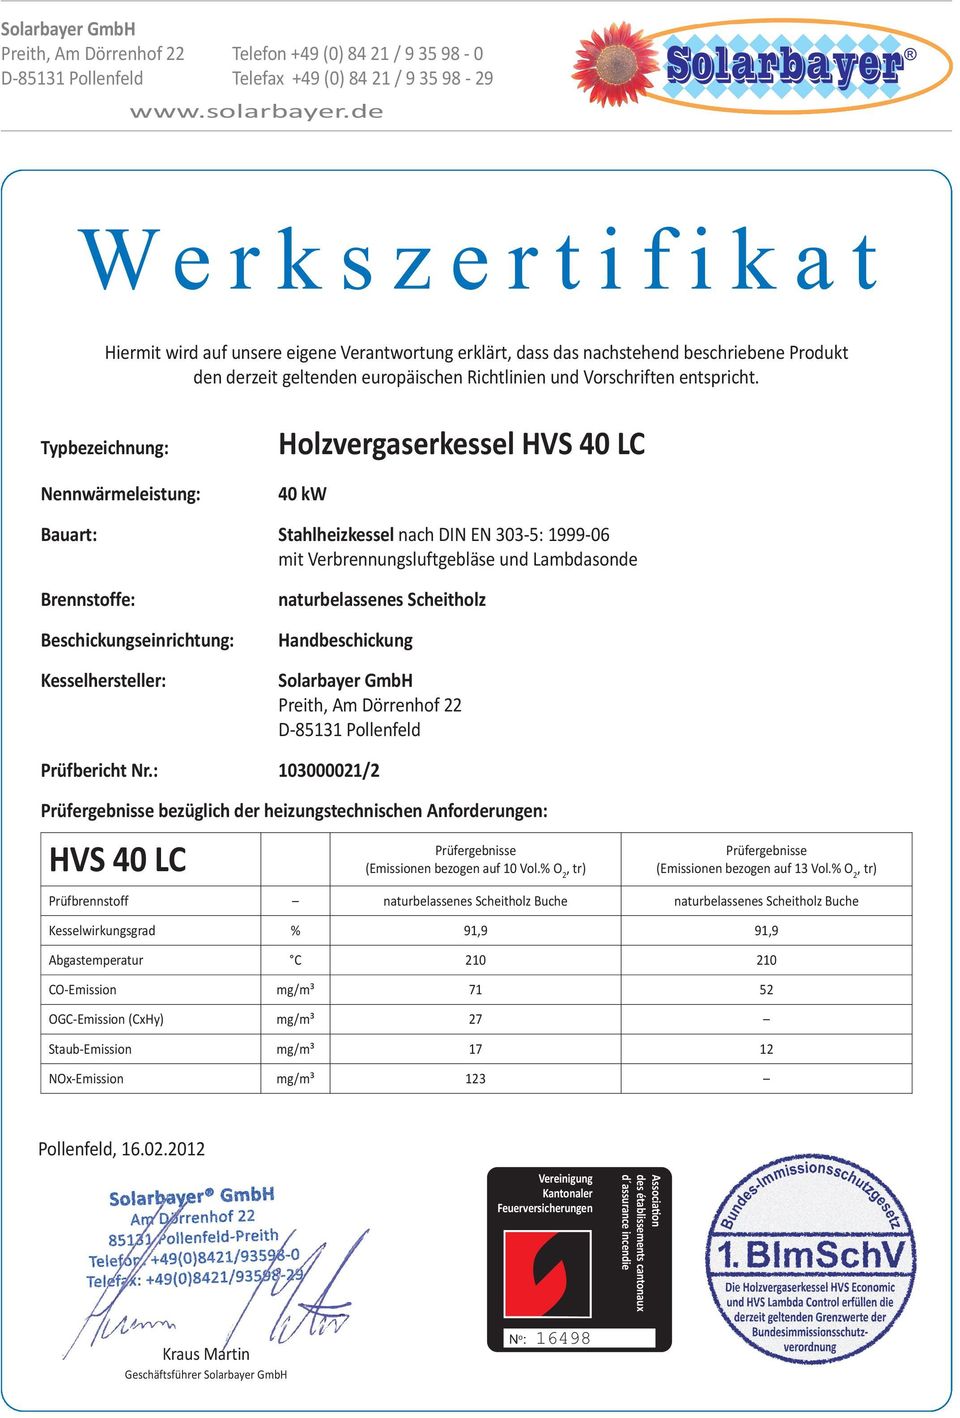 Buche Buche Kesselwirkungsgrad % 91,9 91,9 Abgastemperatur C 210 210 CO-Emission mg/m³ 71